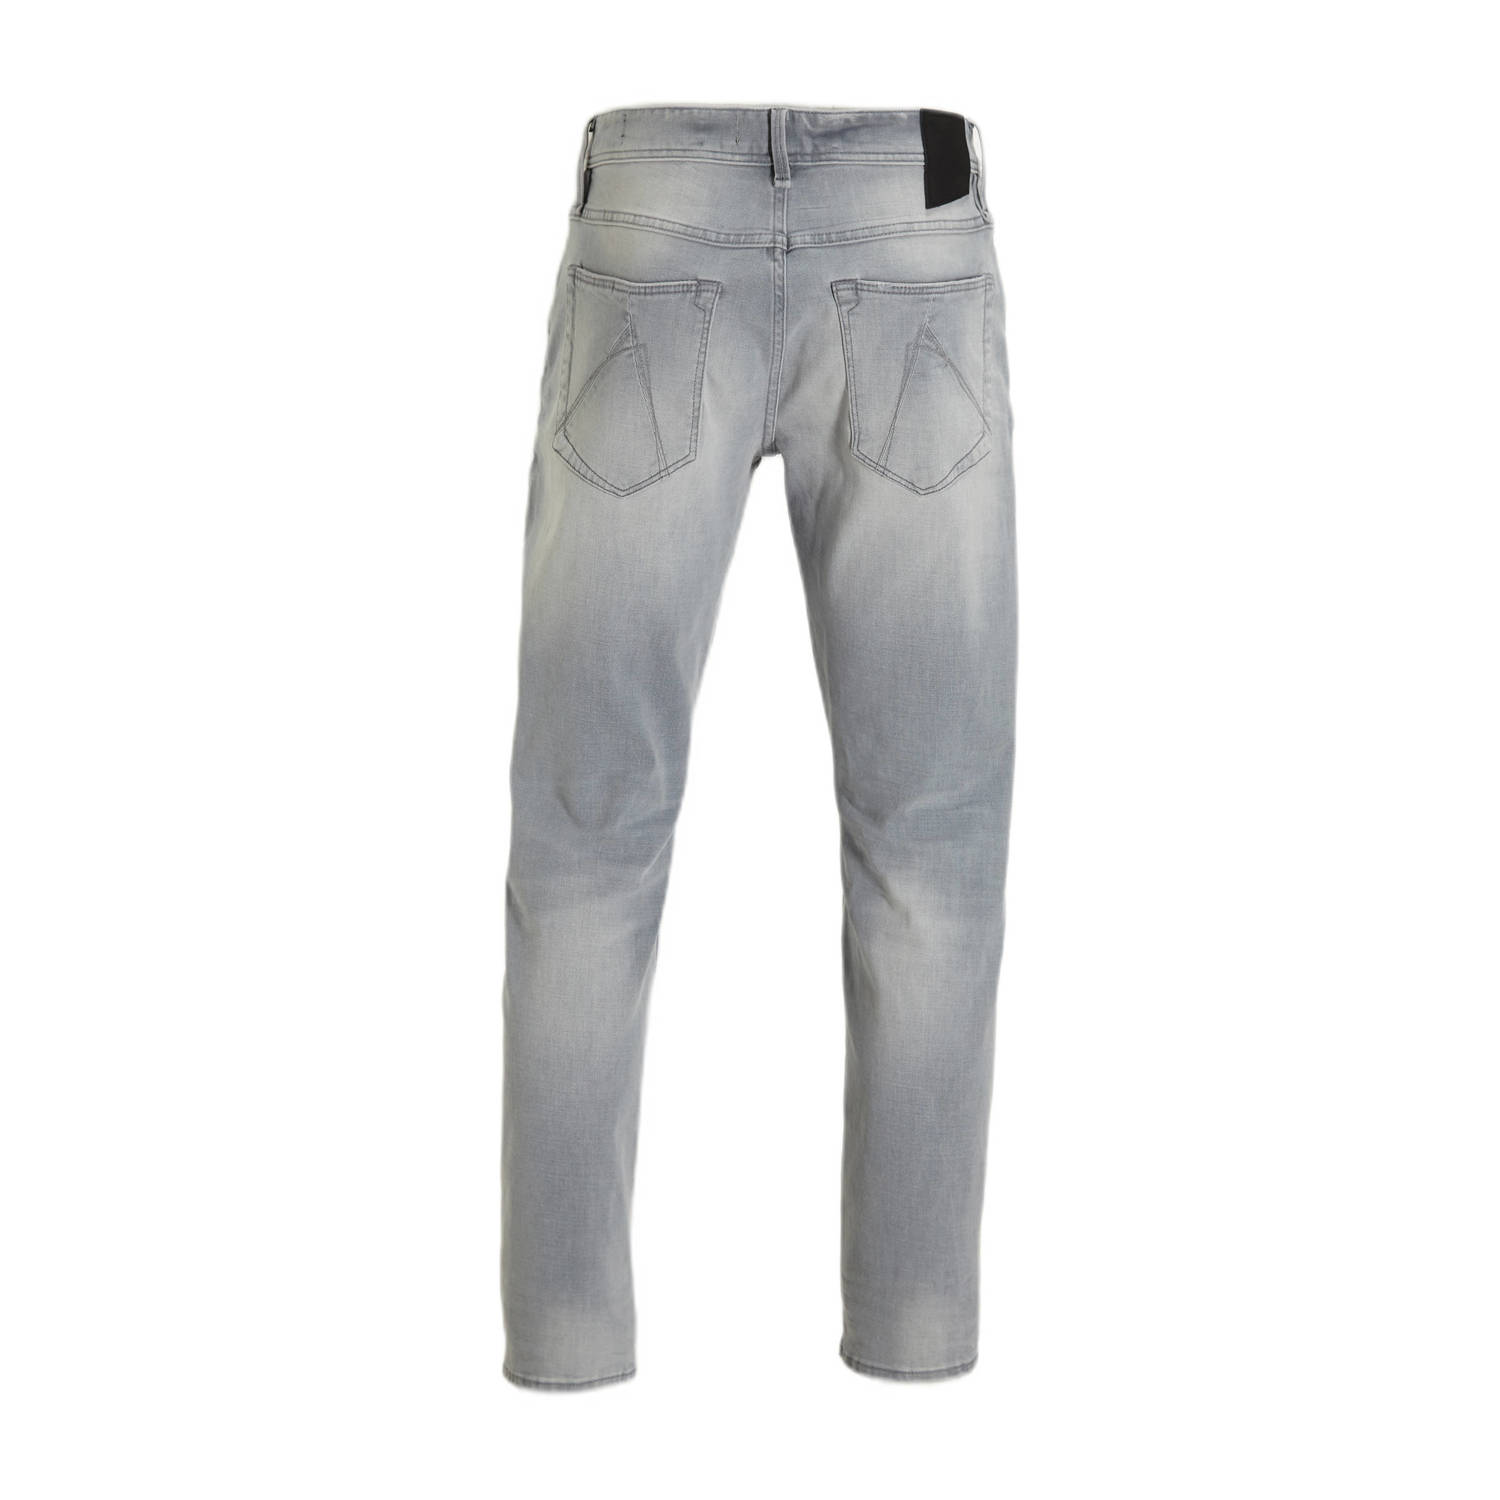 CHASIN' regular fit jeans Iron Brighton grey denim